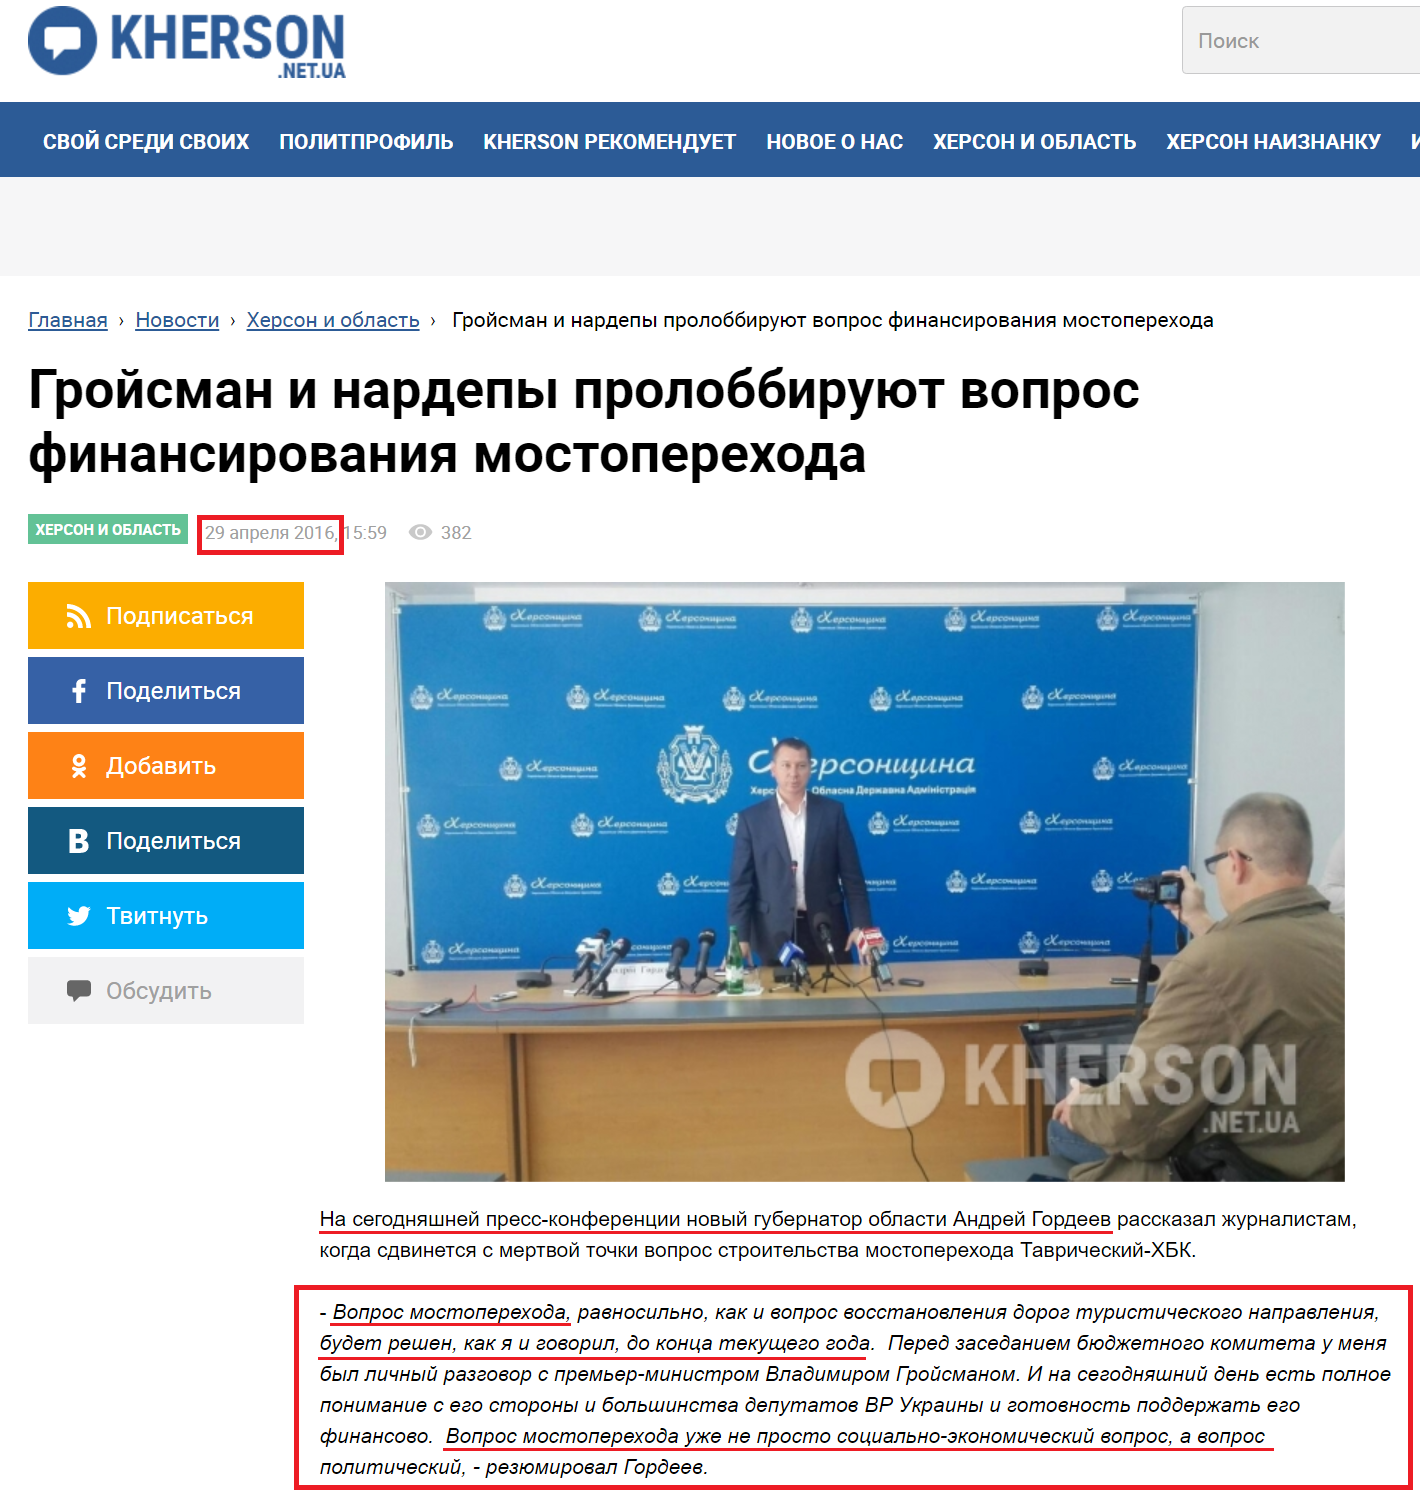 http://kherson.net.ua/news/-grojsman-i-nardepy-prolobbirujut-vopros-finansirovanija-mostoperehoda